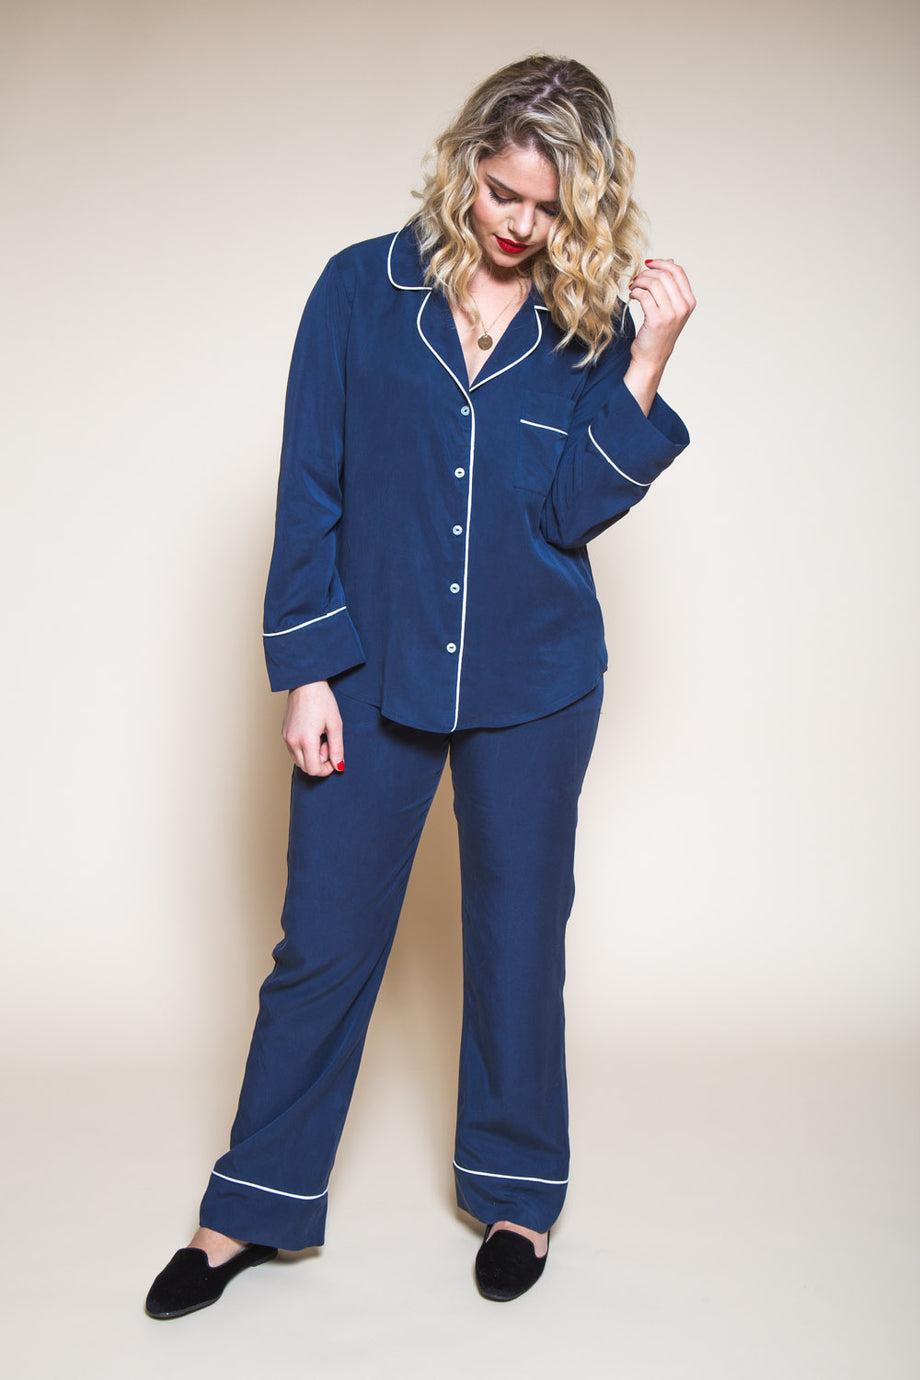 Dark Blue jegging – The Pajama Factory